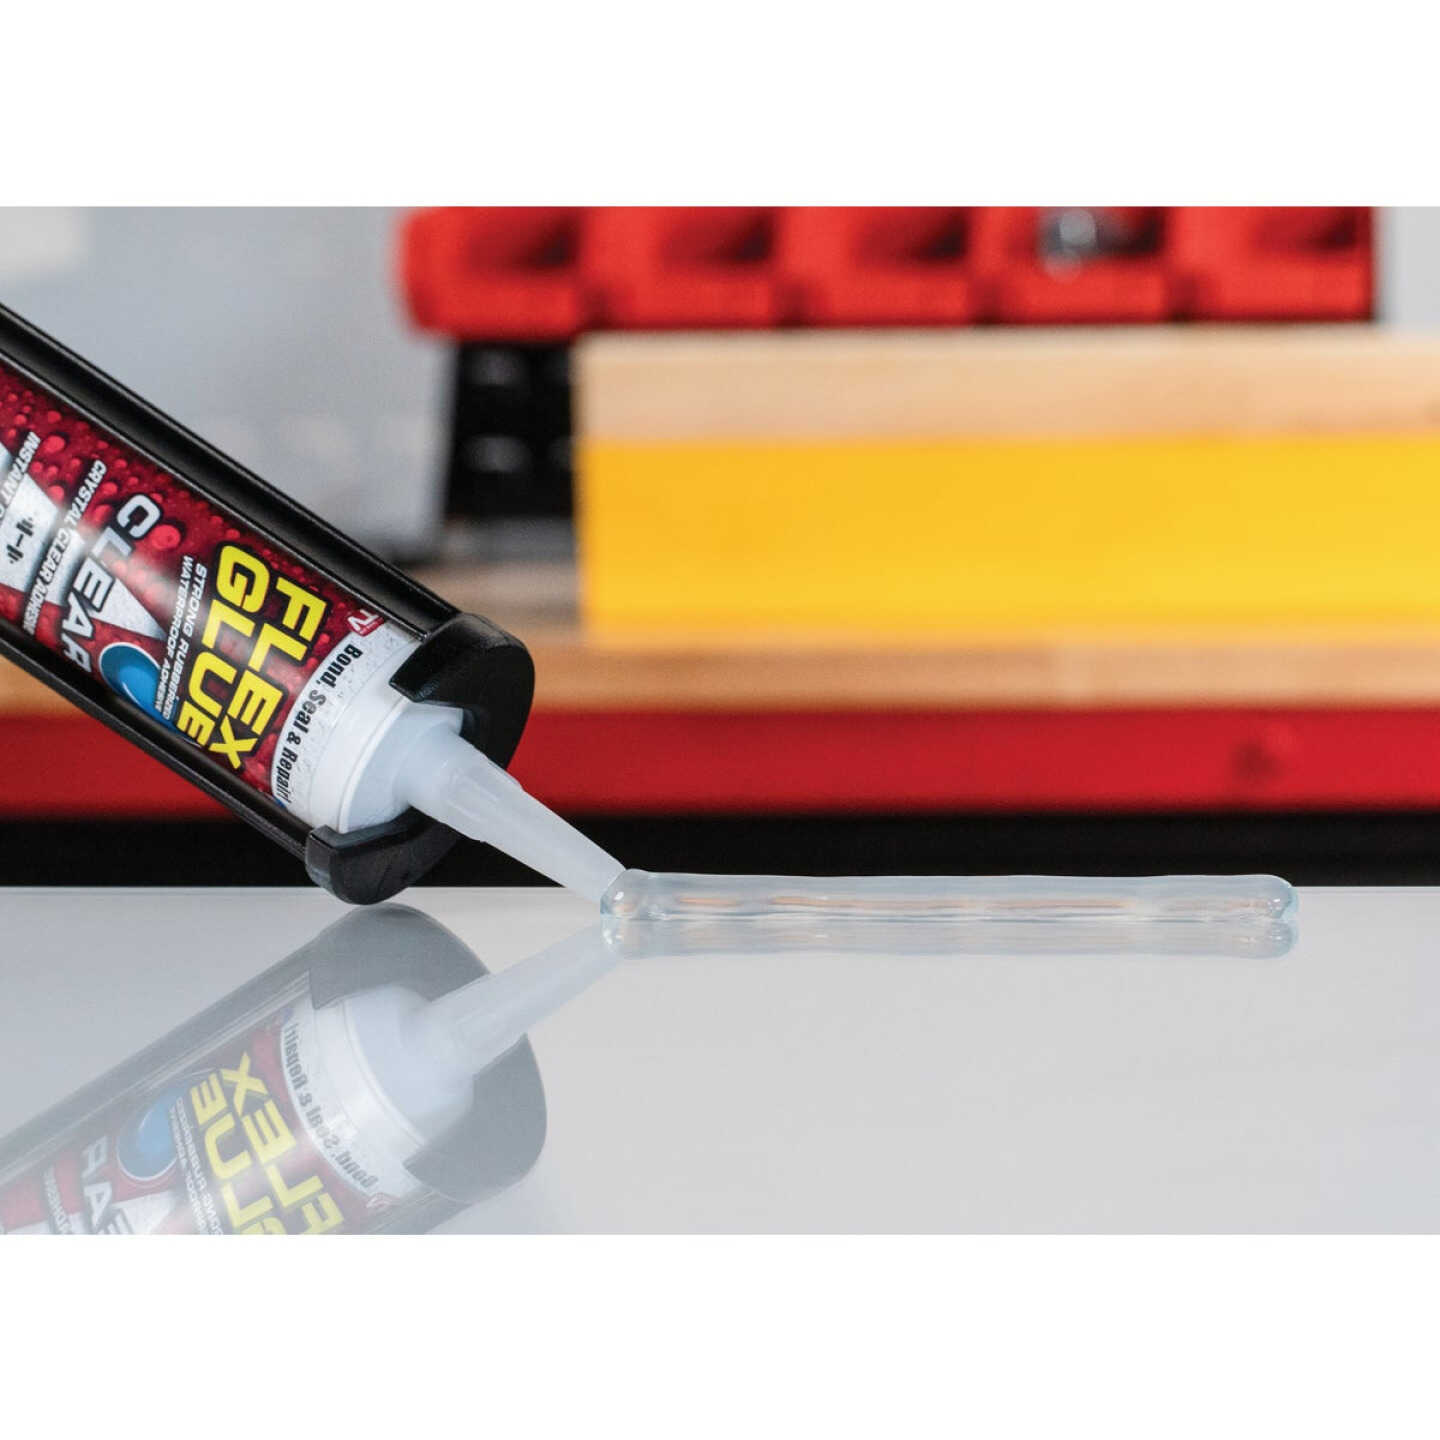 Flex Glue 9 Oz. Clear Multi-Purpose Adhesive - Power Townsend Company